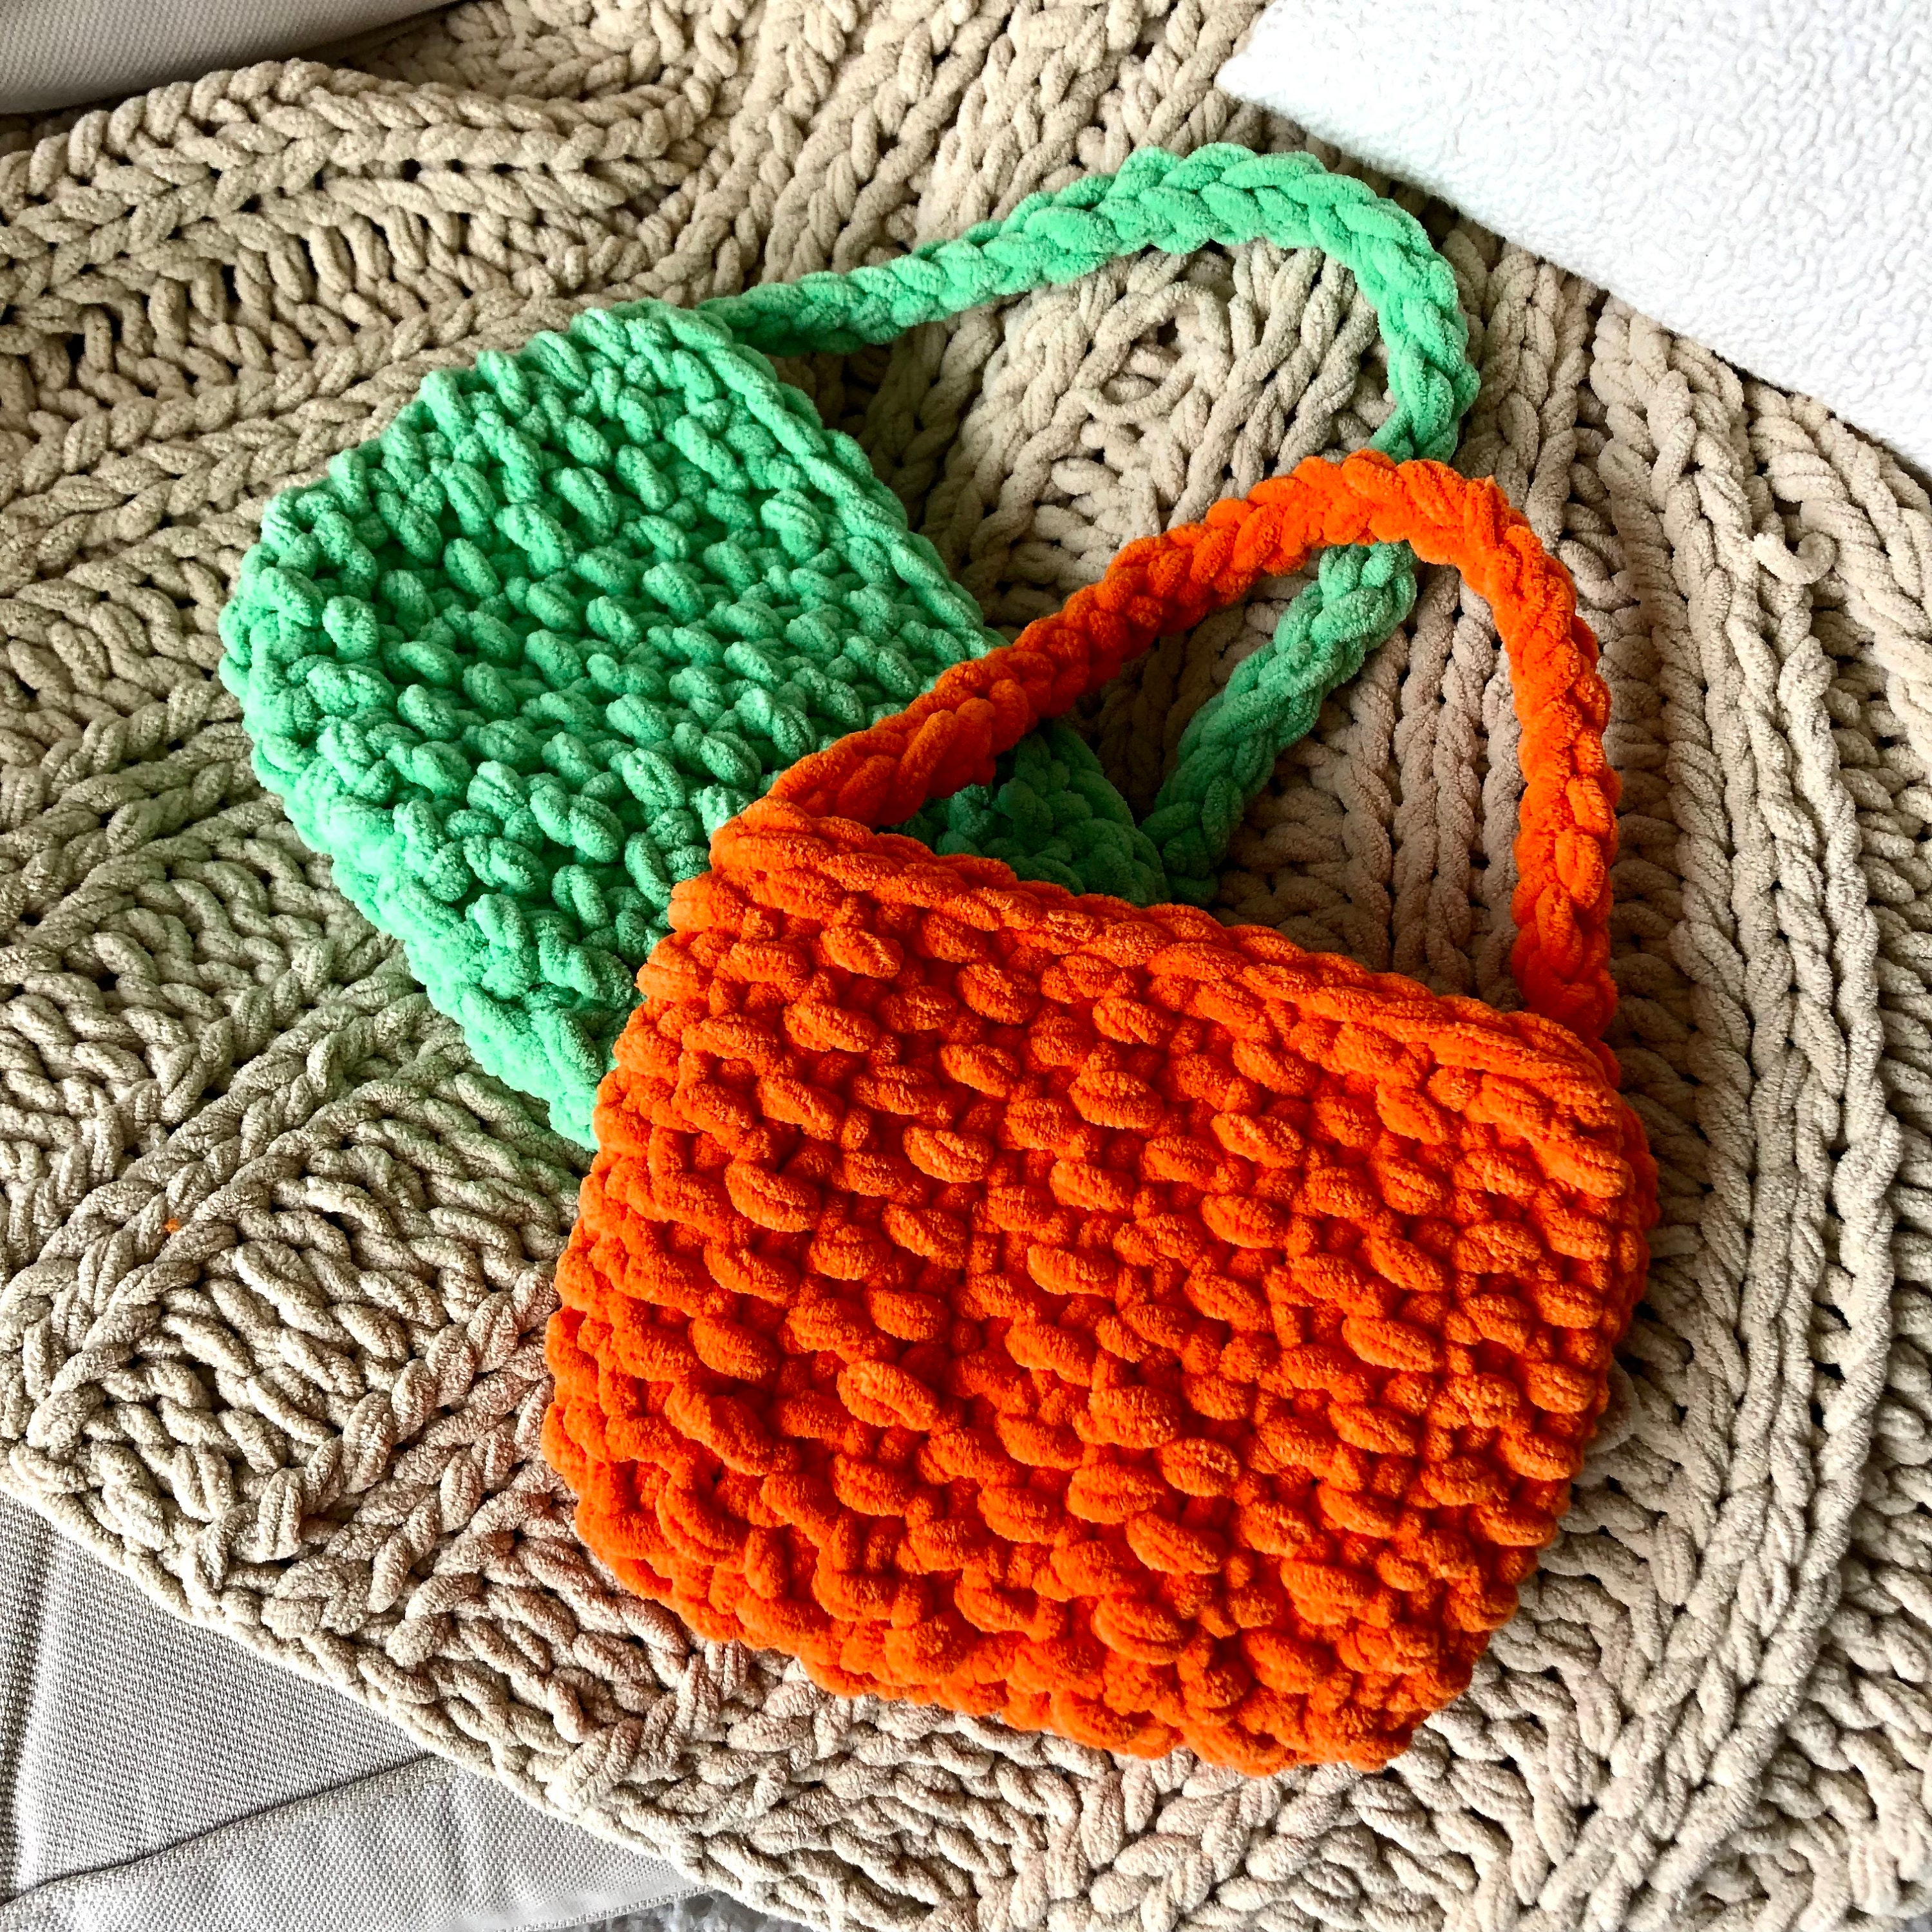 Knot A Knitter Knit Kit, Complete Beginner Knit Kit, Get Started